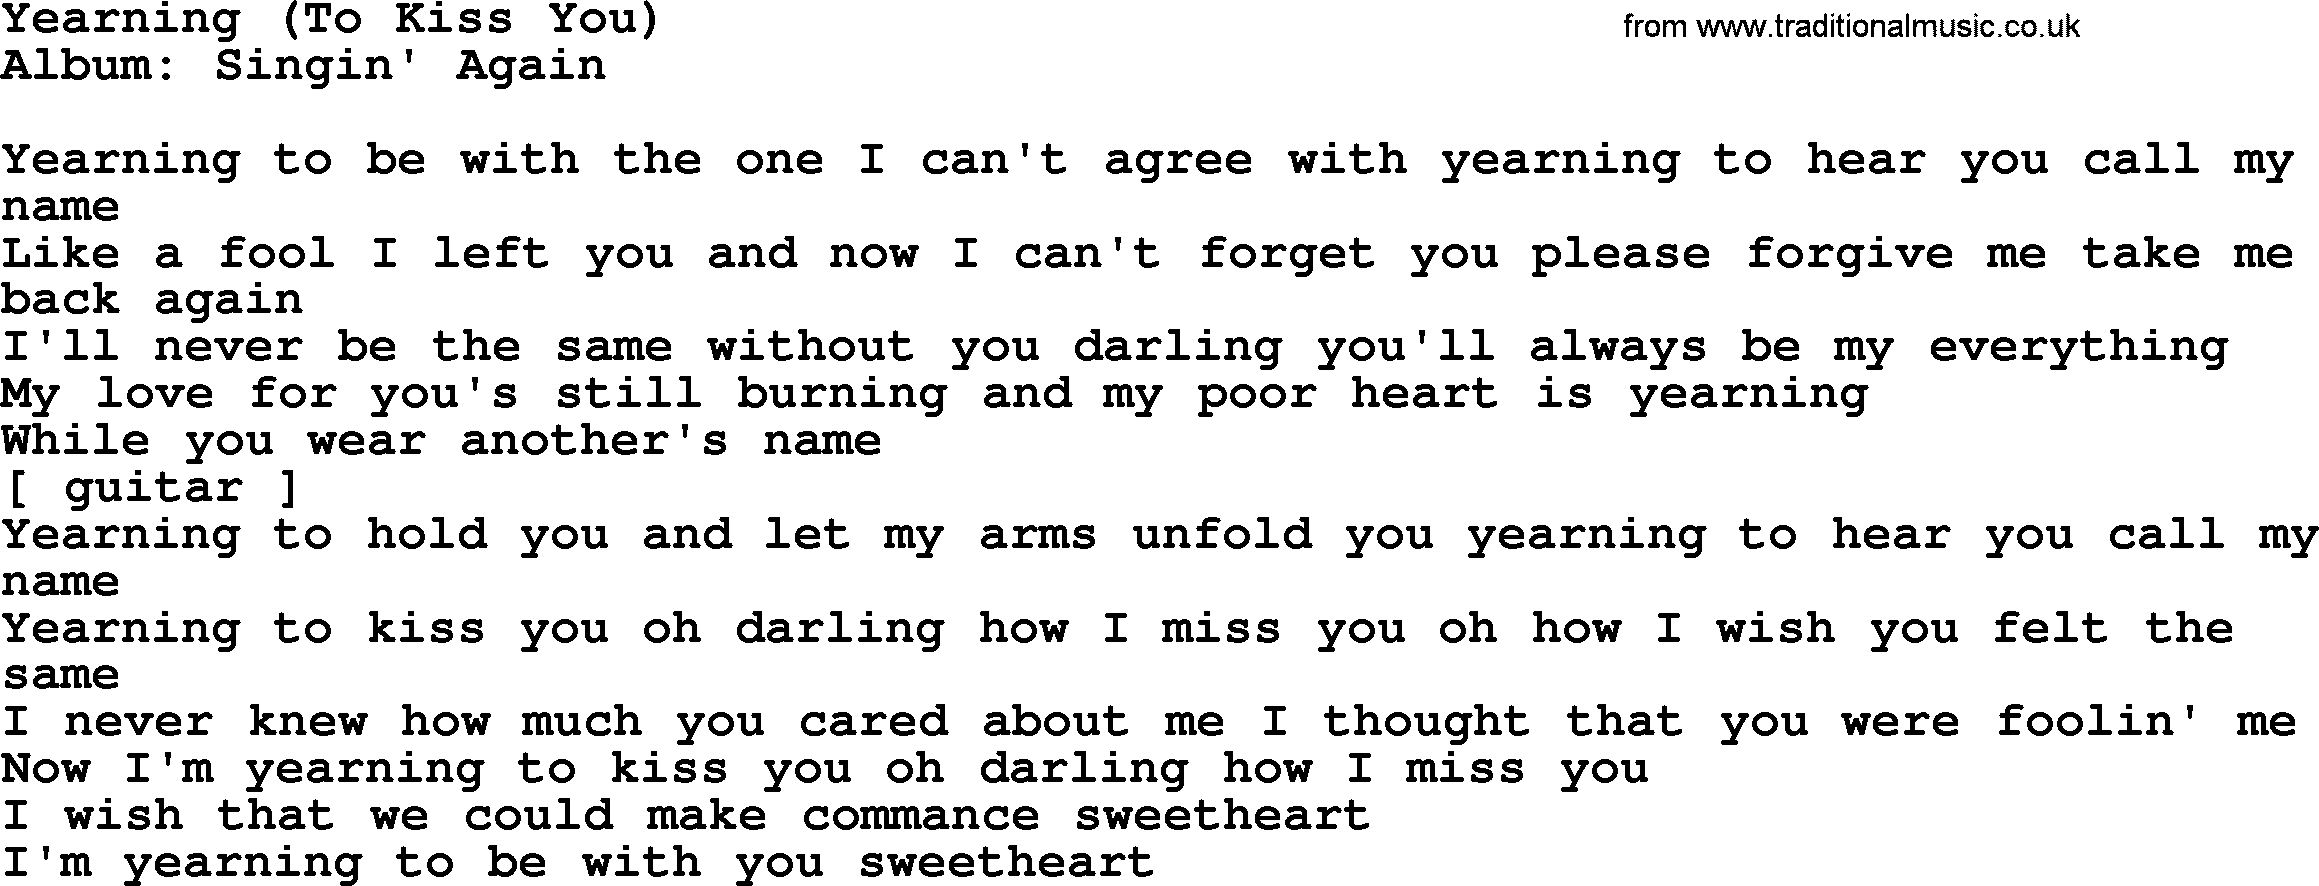 Loretta Lynn song: Yearning (To Kiss You) lyrics